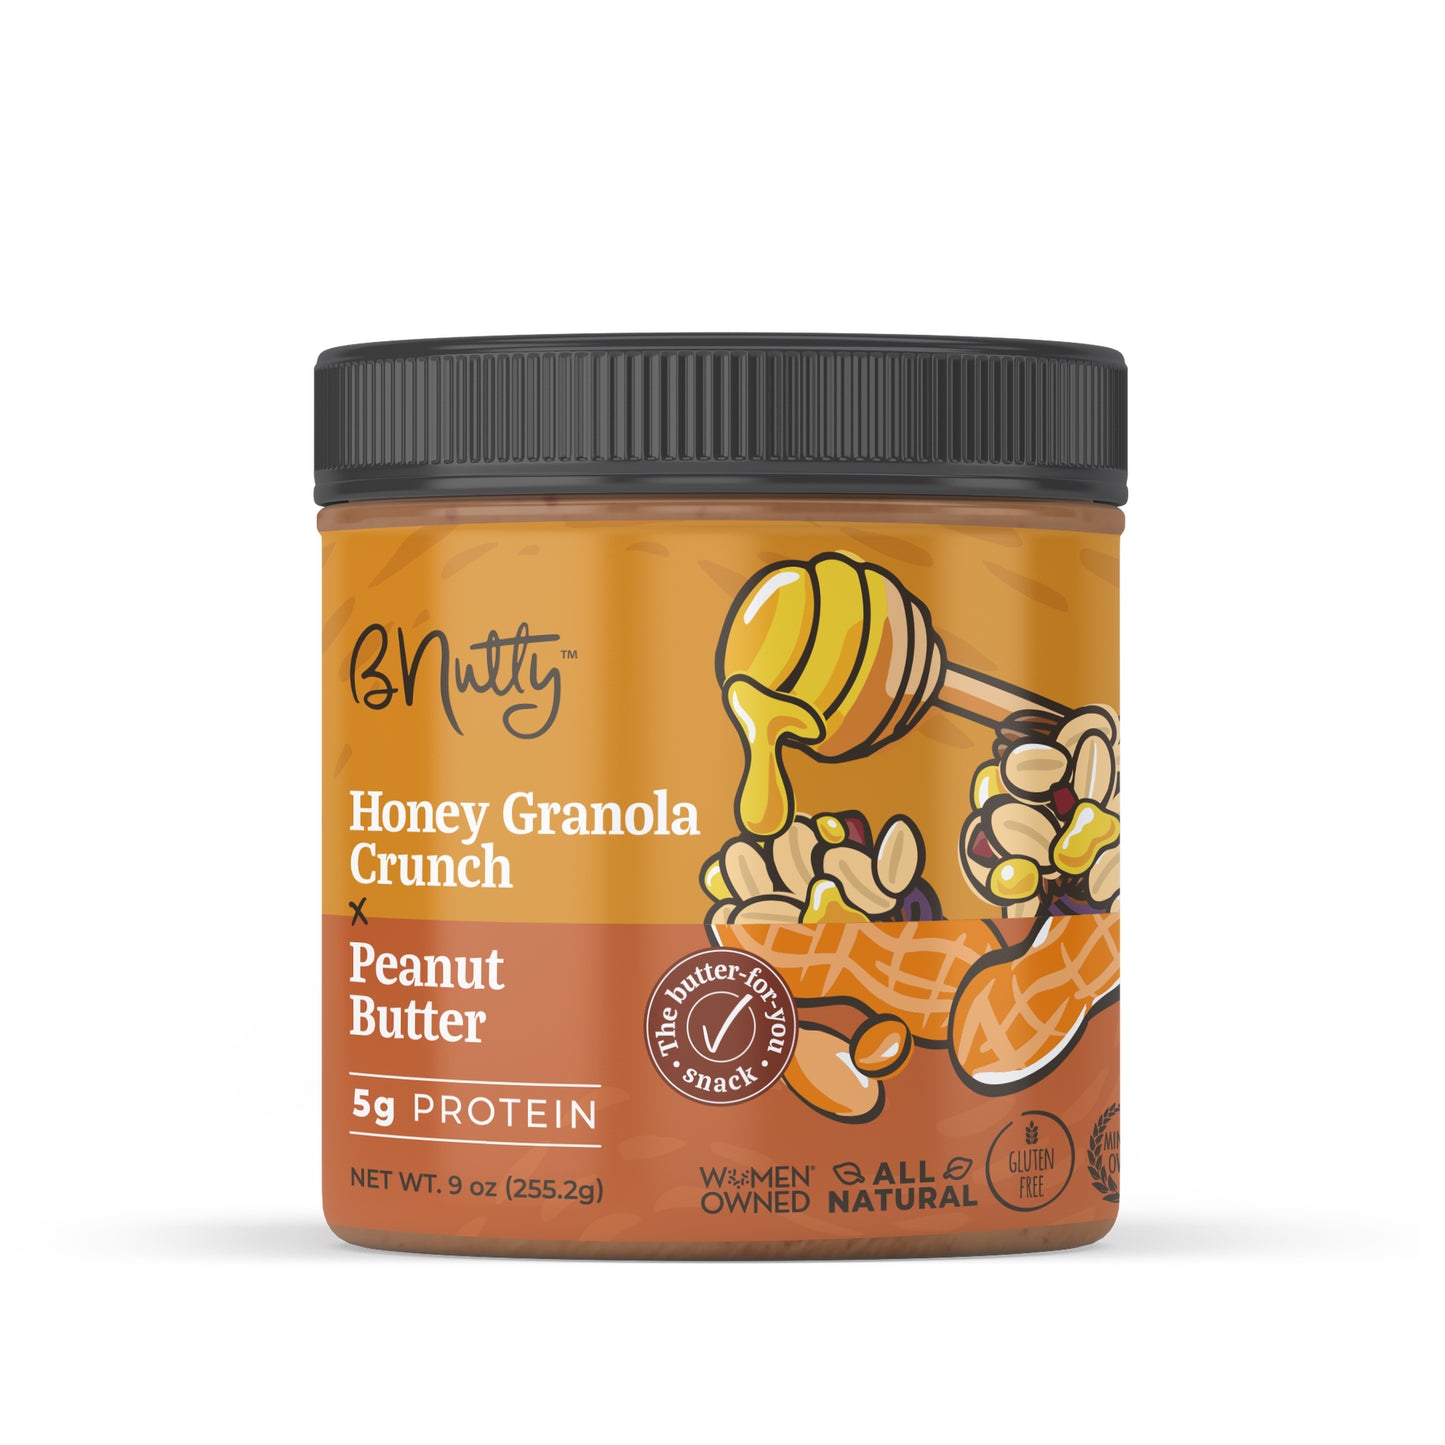 Honey Granola Crunch Peanut Butter